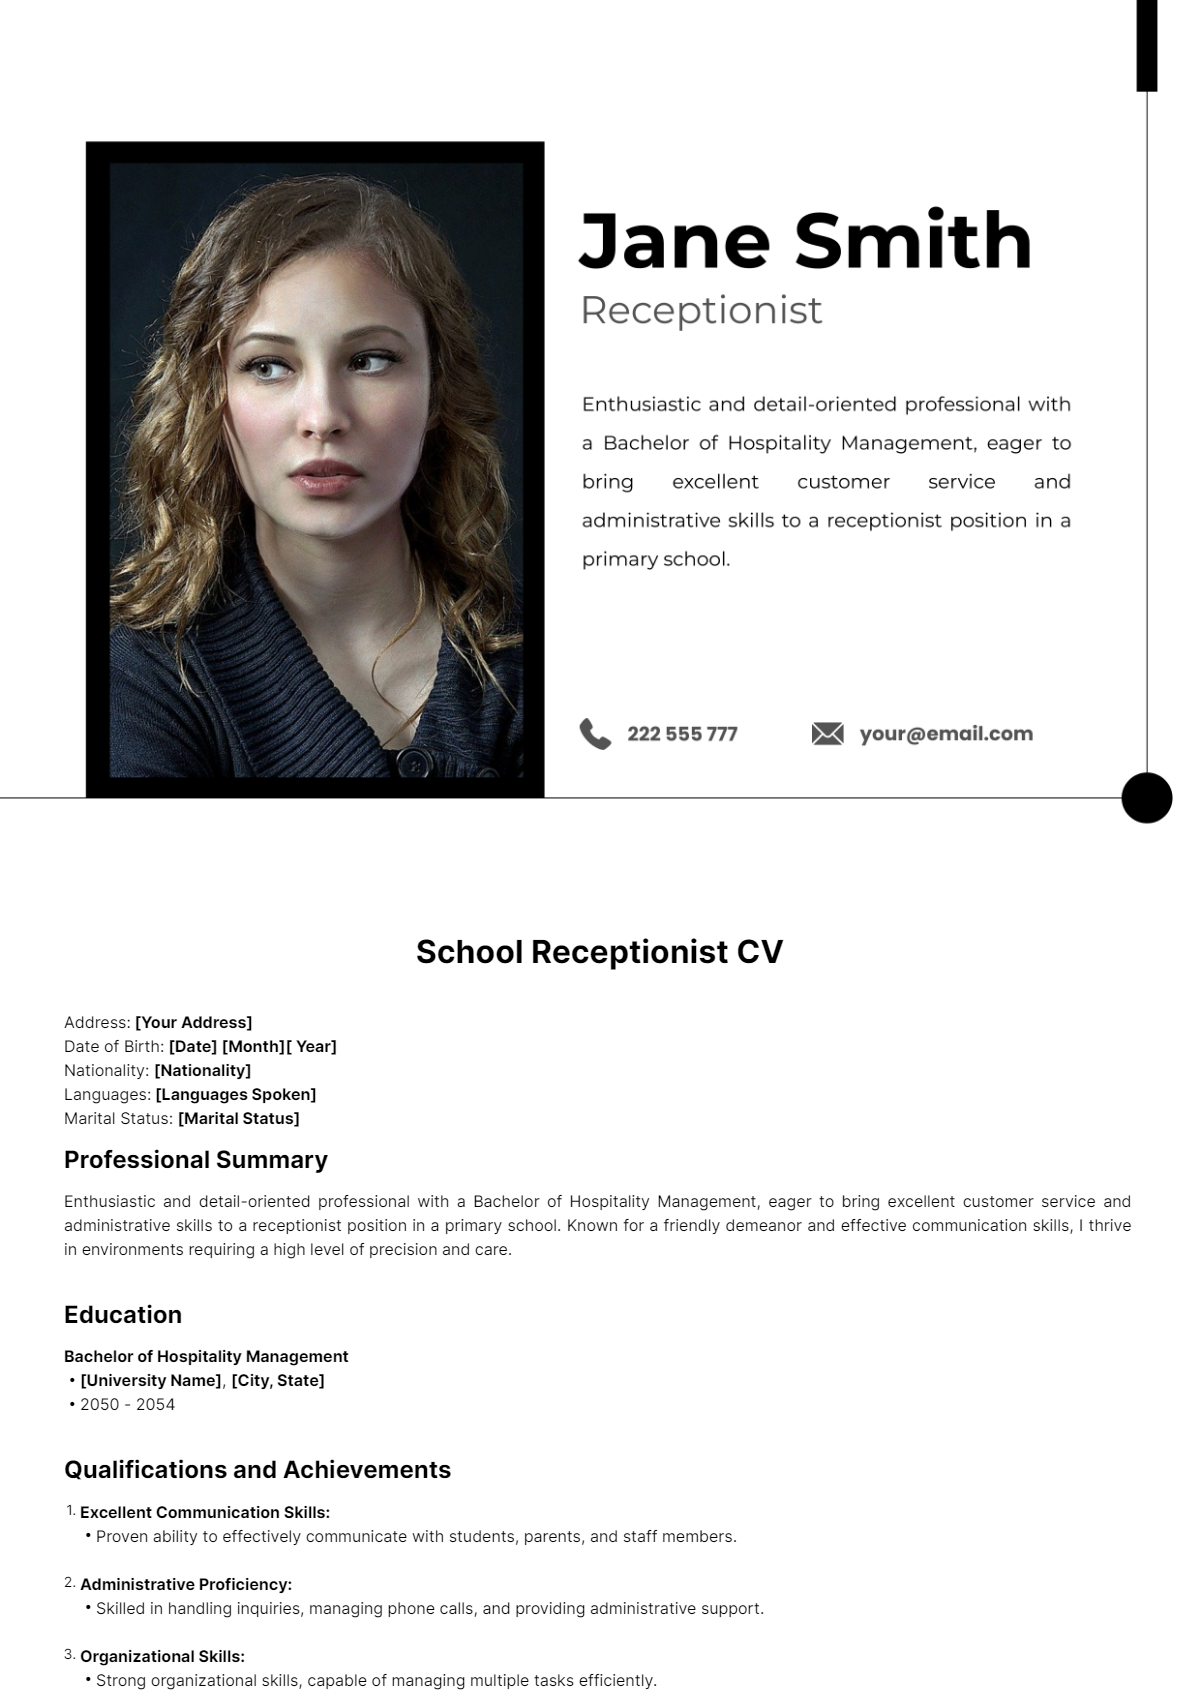 School Receptionist CV Template